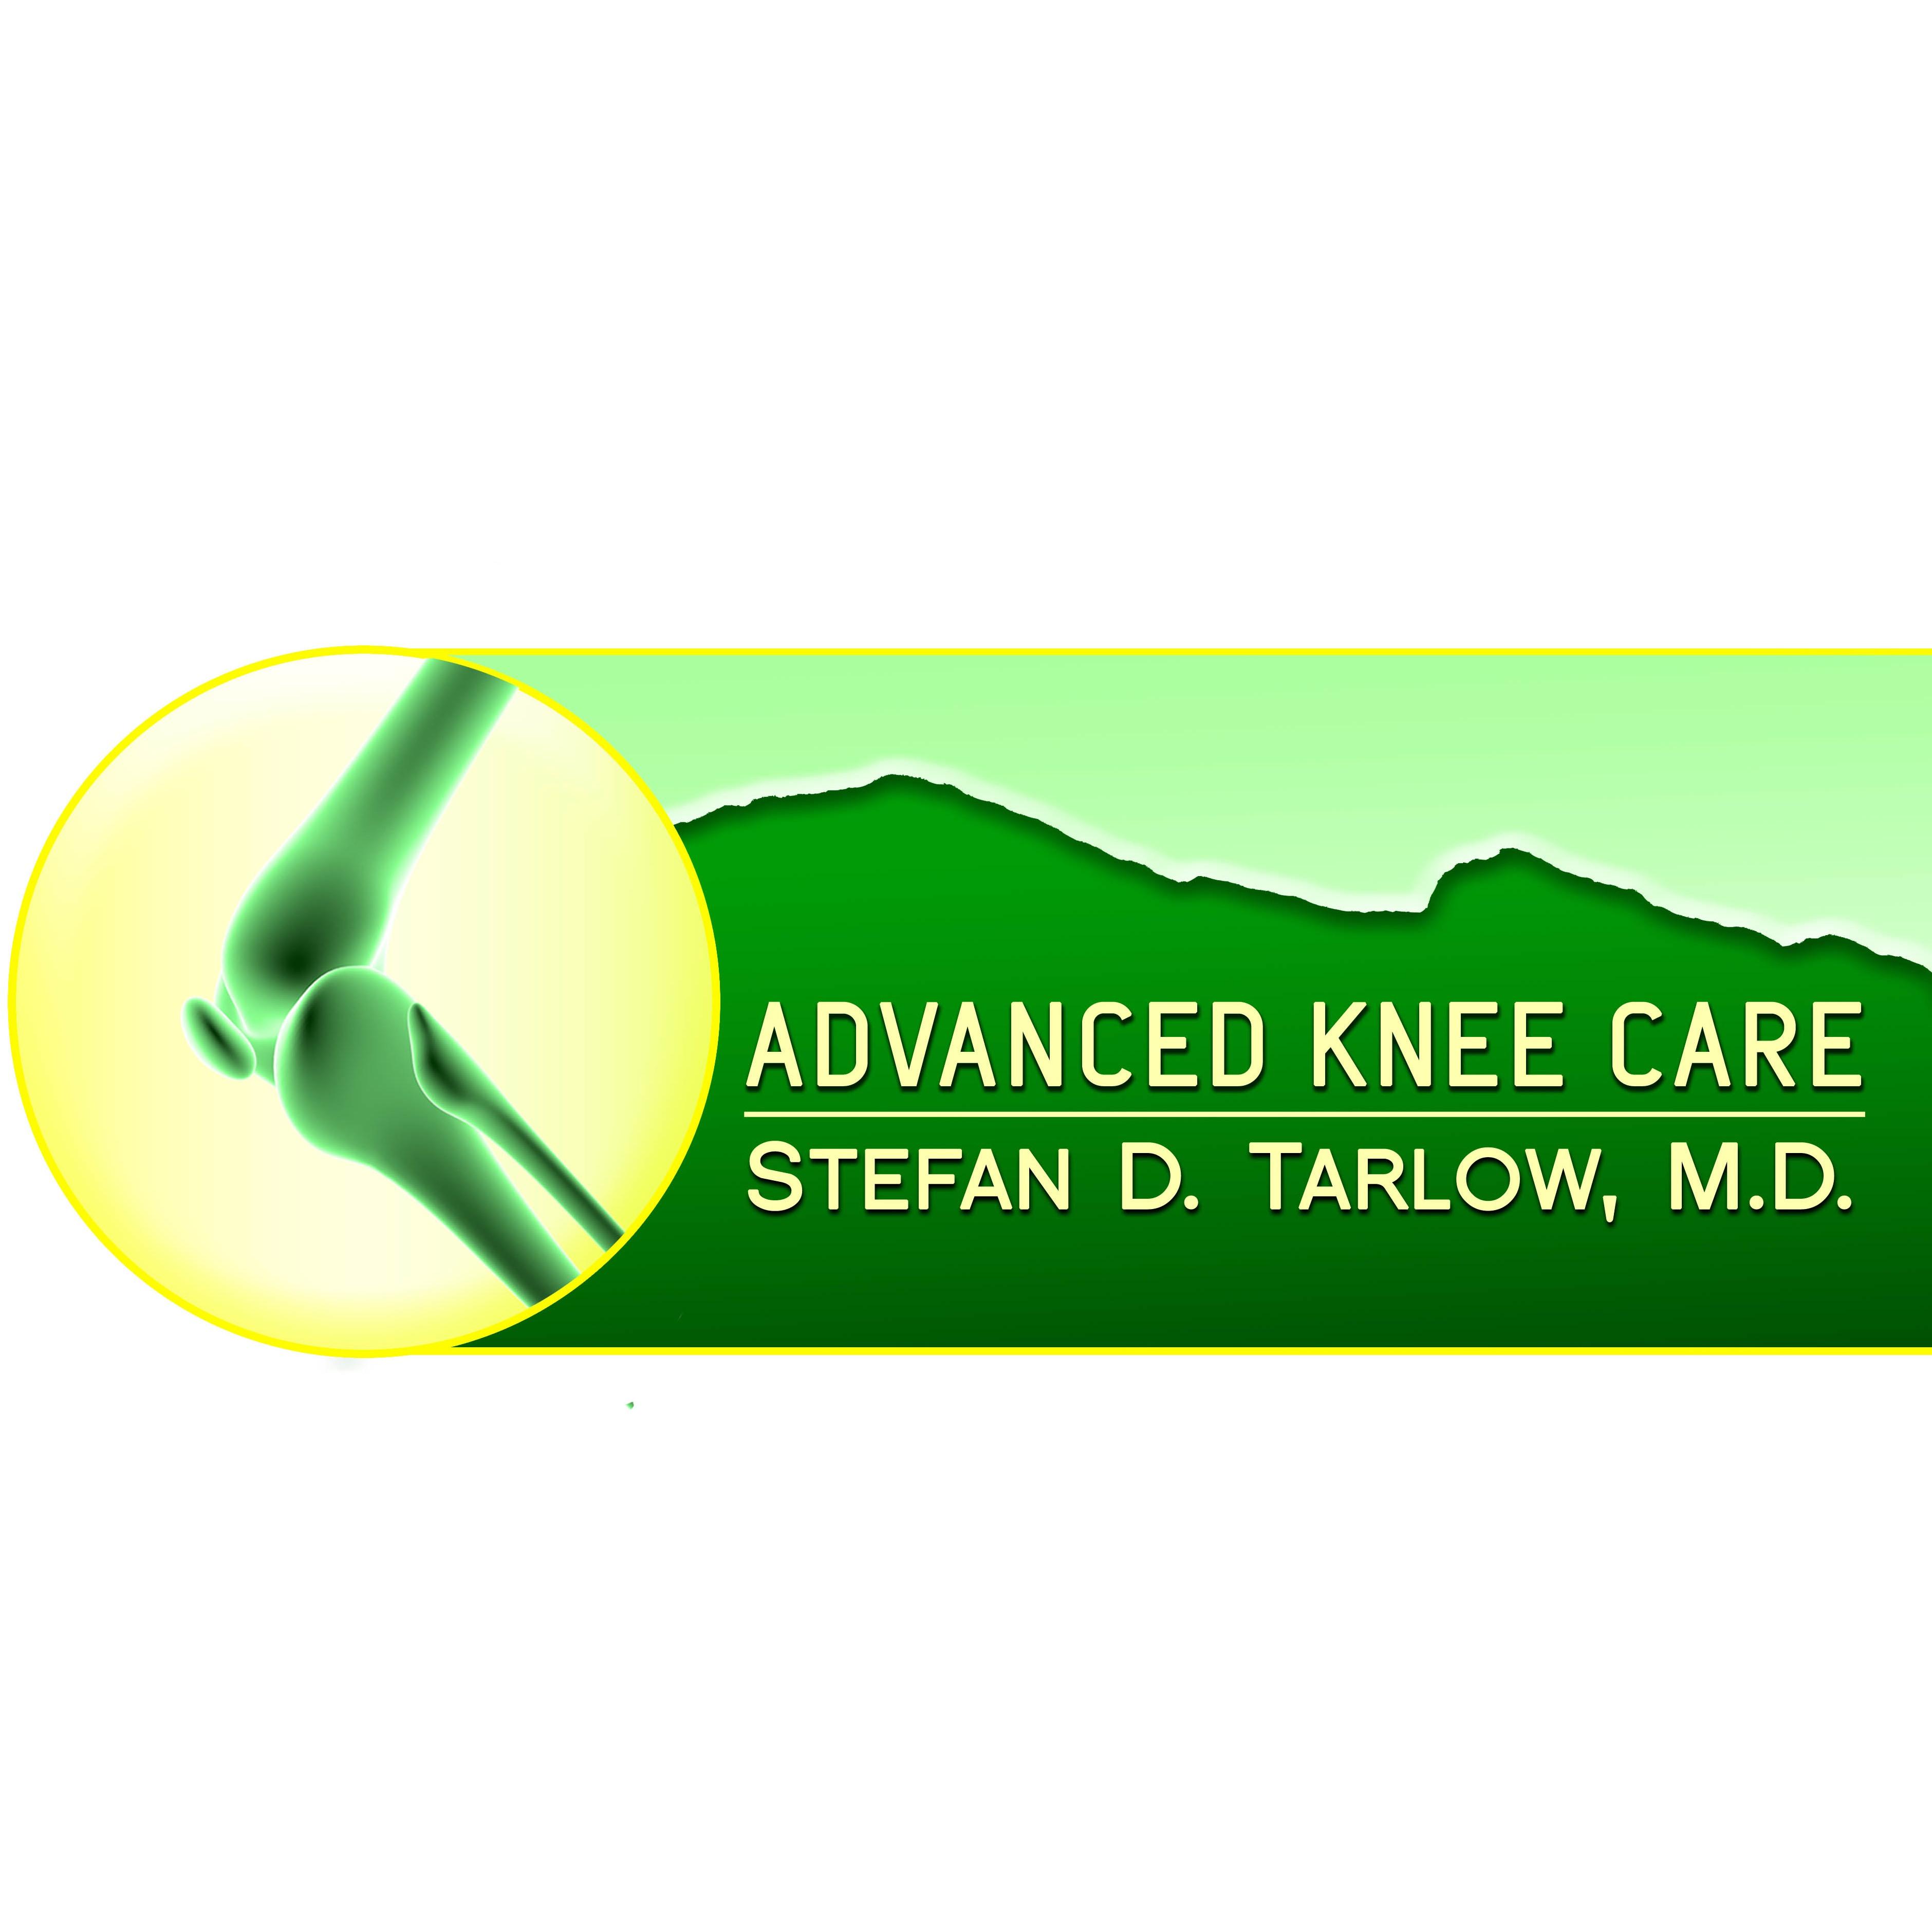 Advanced Knee Care - Scottsdale, AZ 85258 - (480)483-0393 | ShowMeLocal.com